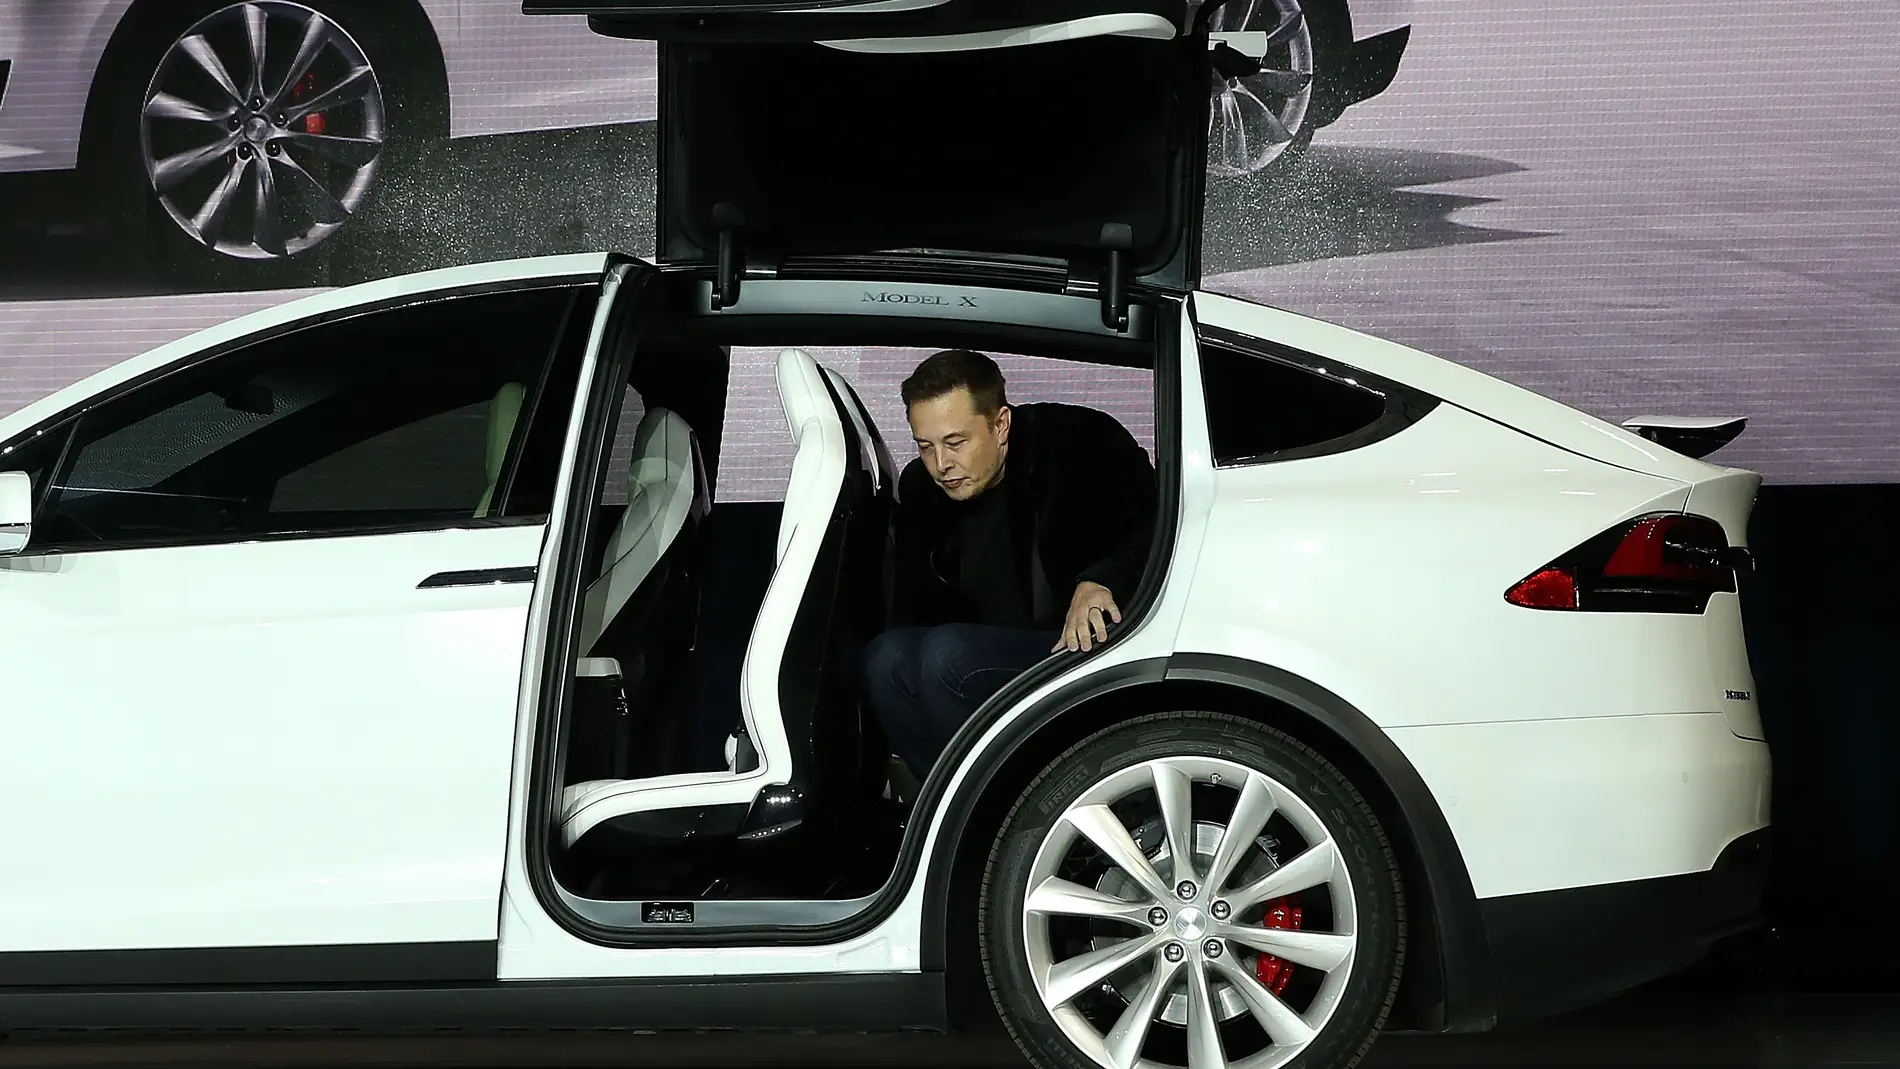 Elon Musk atisba un futuro de paro masivo